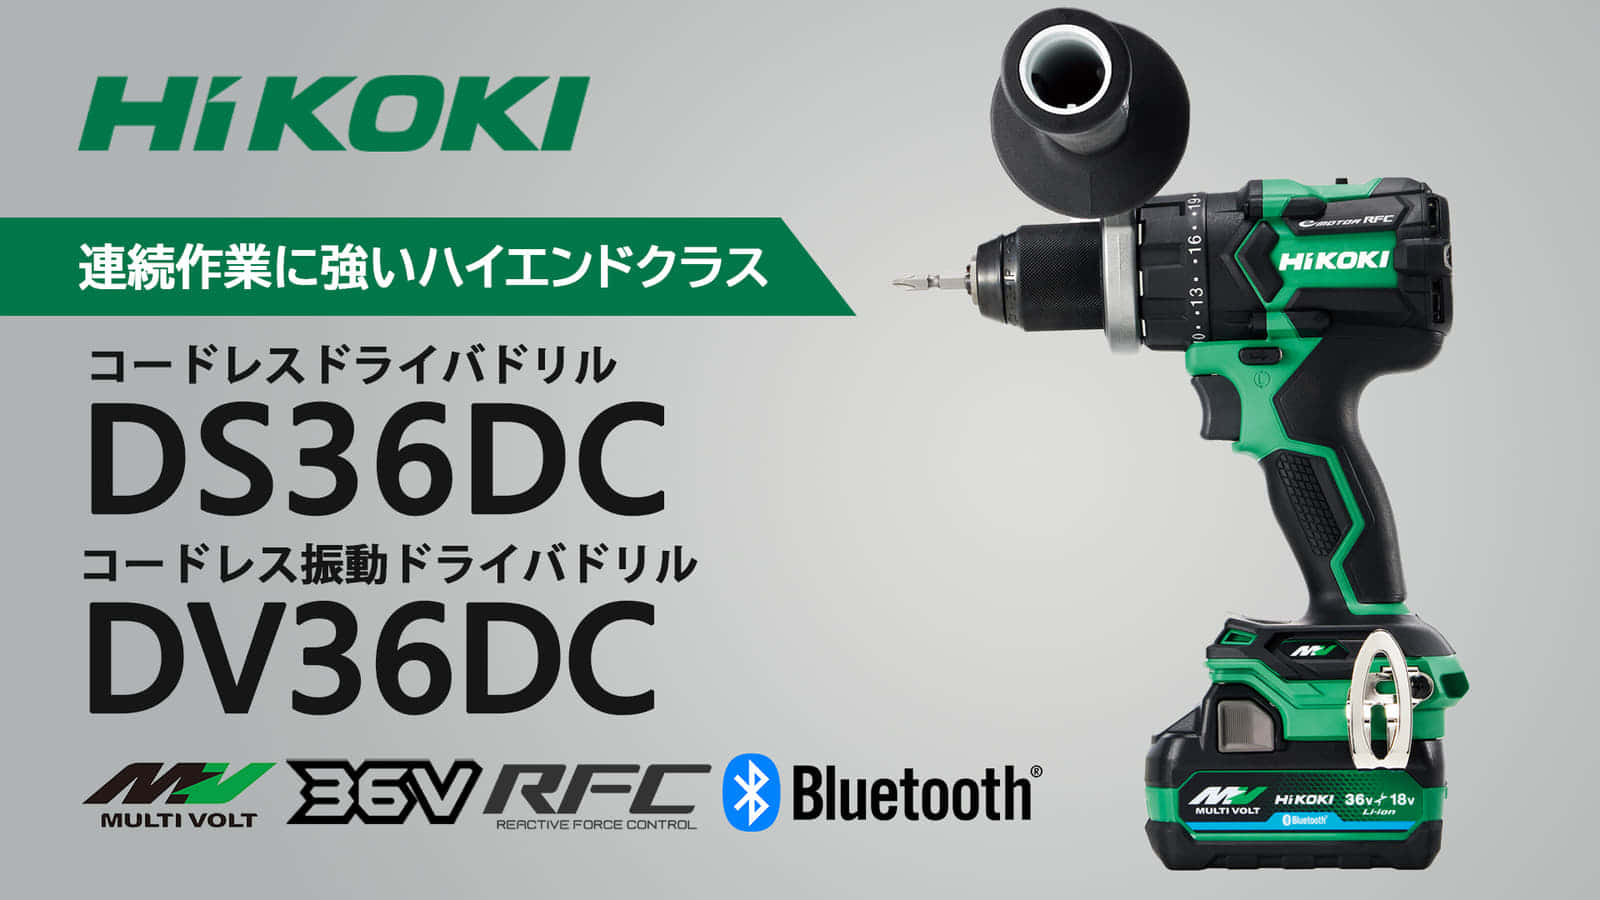 HiKOKI HIKOKI 36Vマルチボルト コードレスドライバドリル DS36DC(NN)(本体のみ) 蓄電池・充電器・ケース別売 